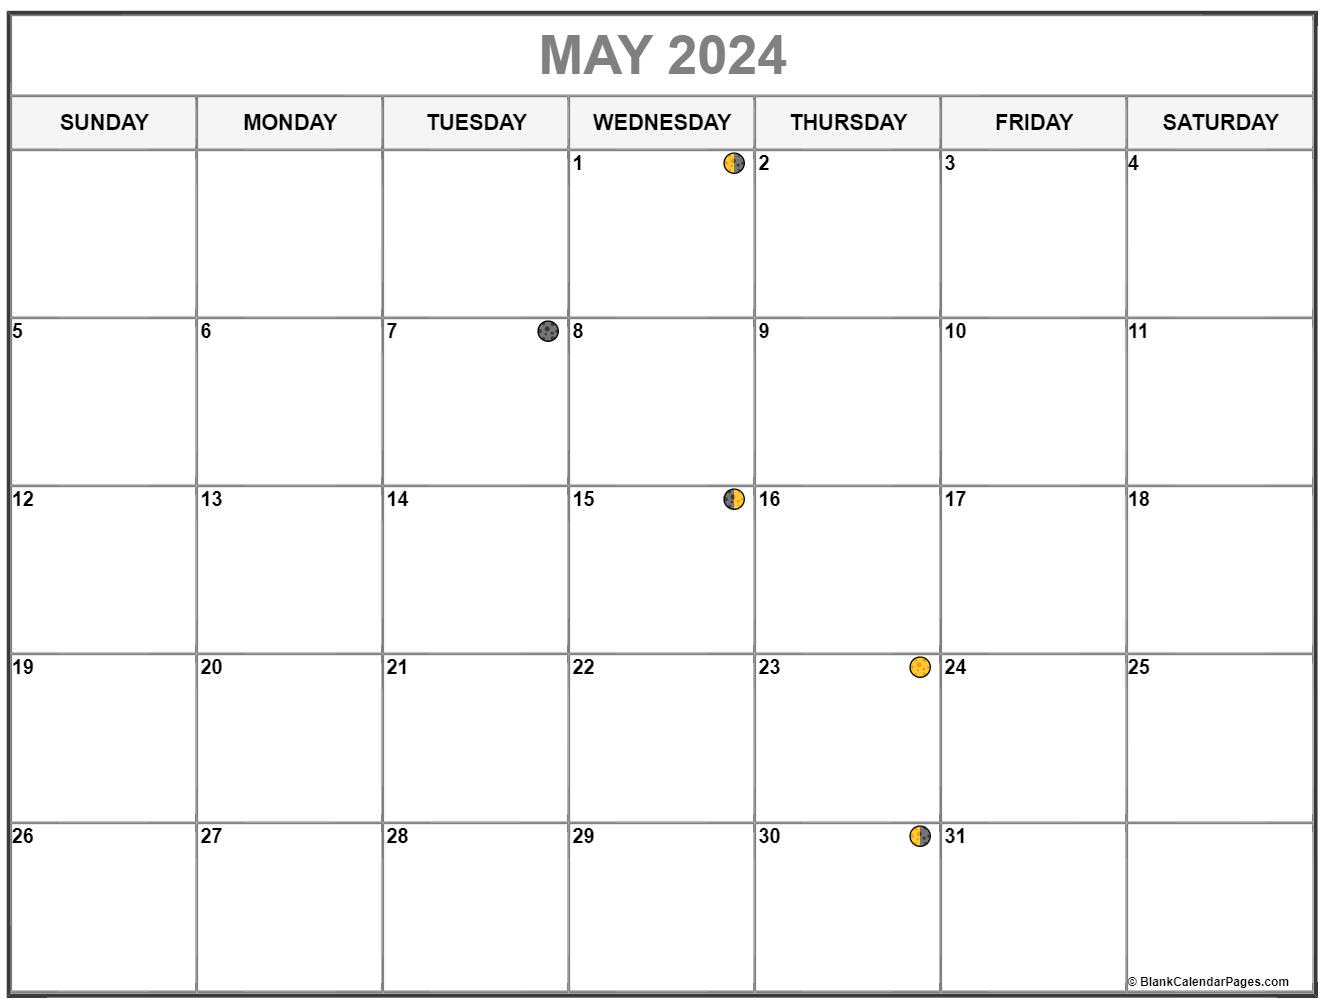 May 2022 Lunar Calendar May 2022 Lunar Calendar | Moon Phase Calendar